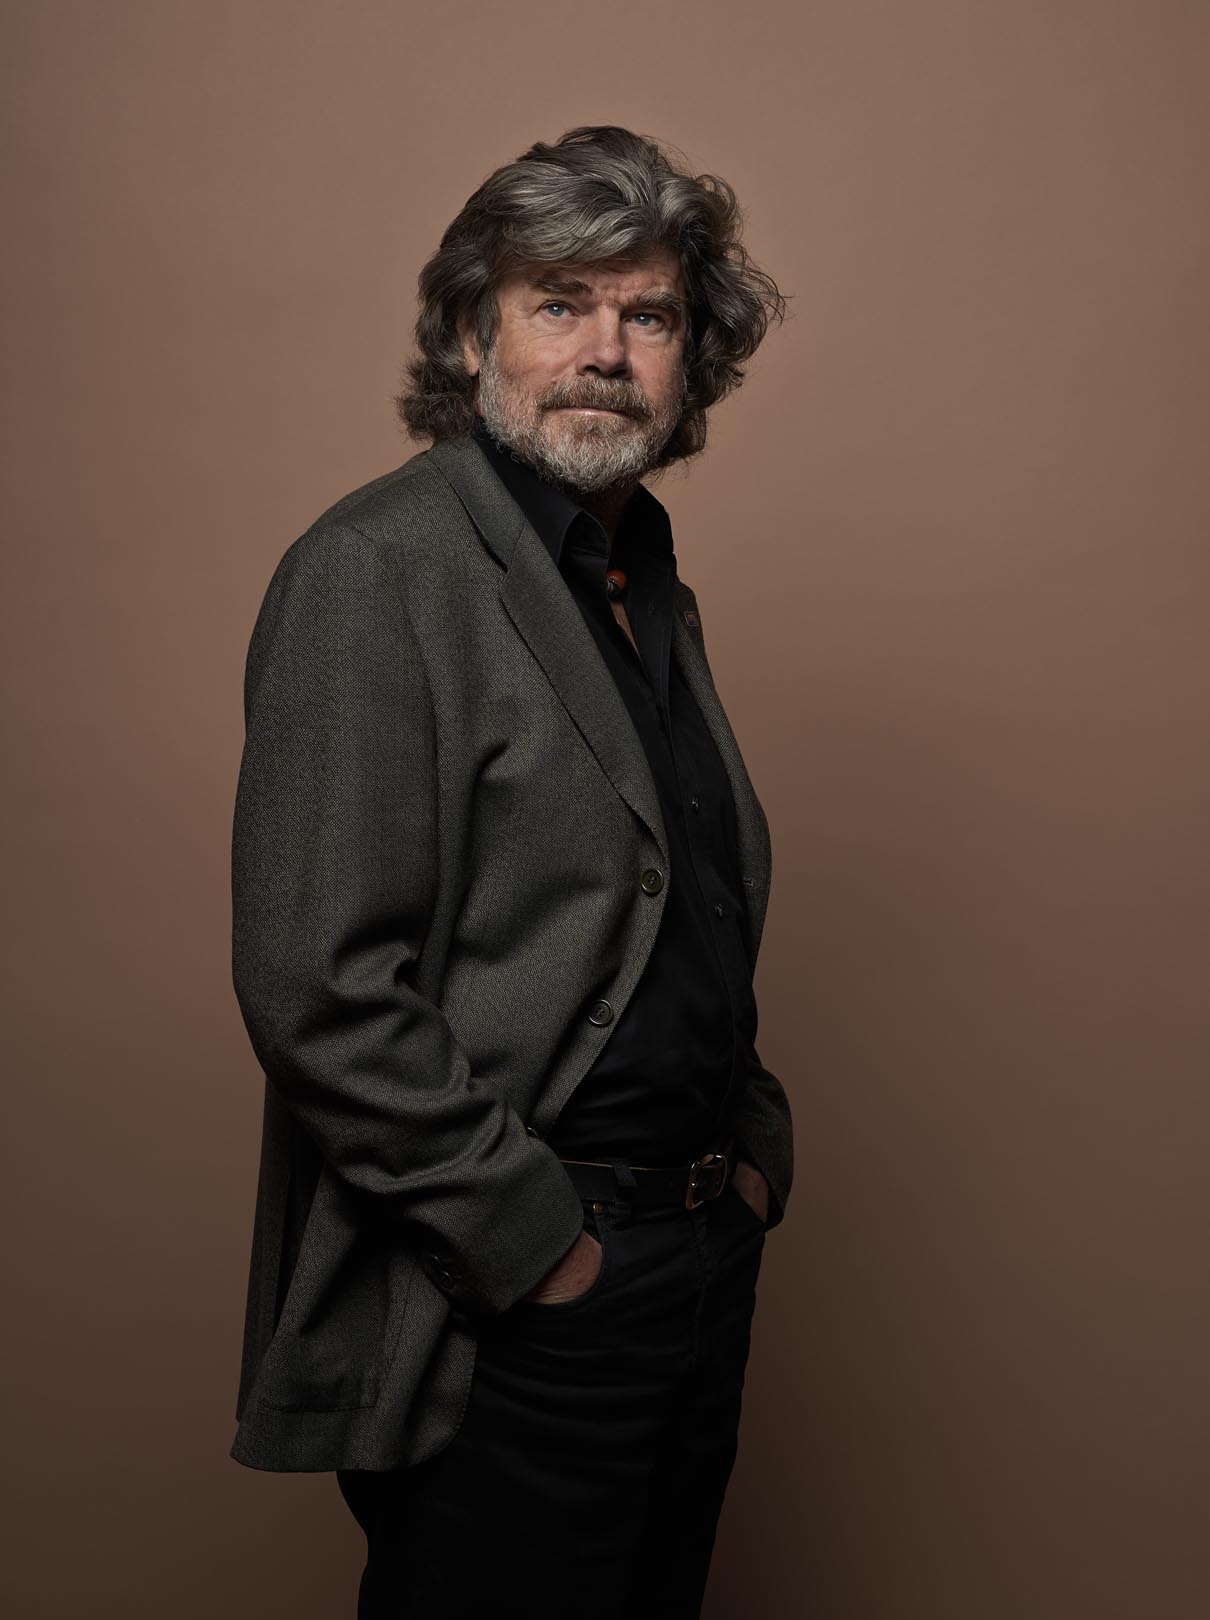 SKY TALK - Reinhold Messner